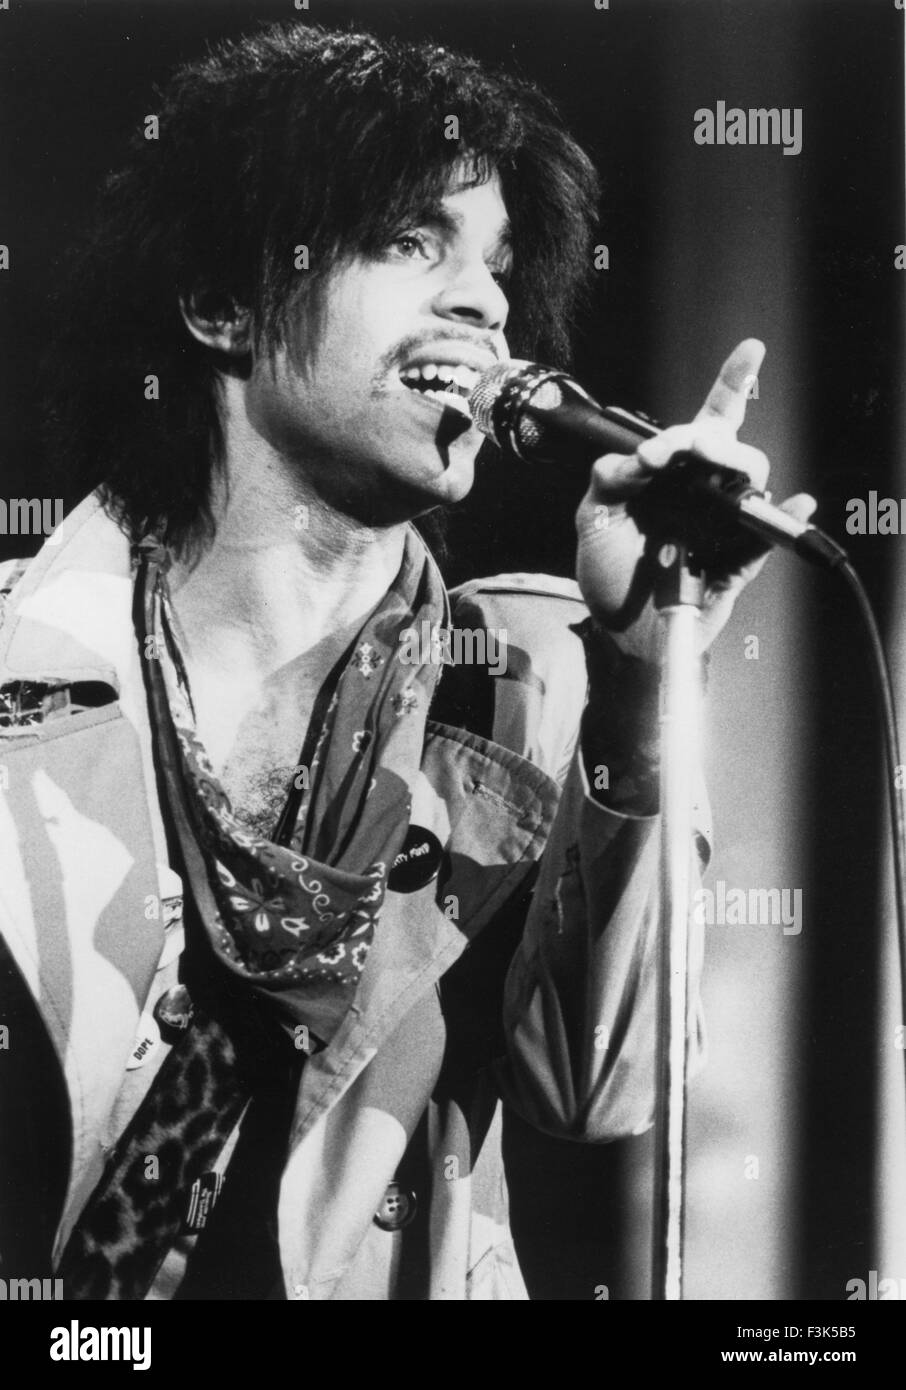 Prinz U.S.-Rock-Musiker im Jahr 1984 Stockfoto